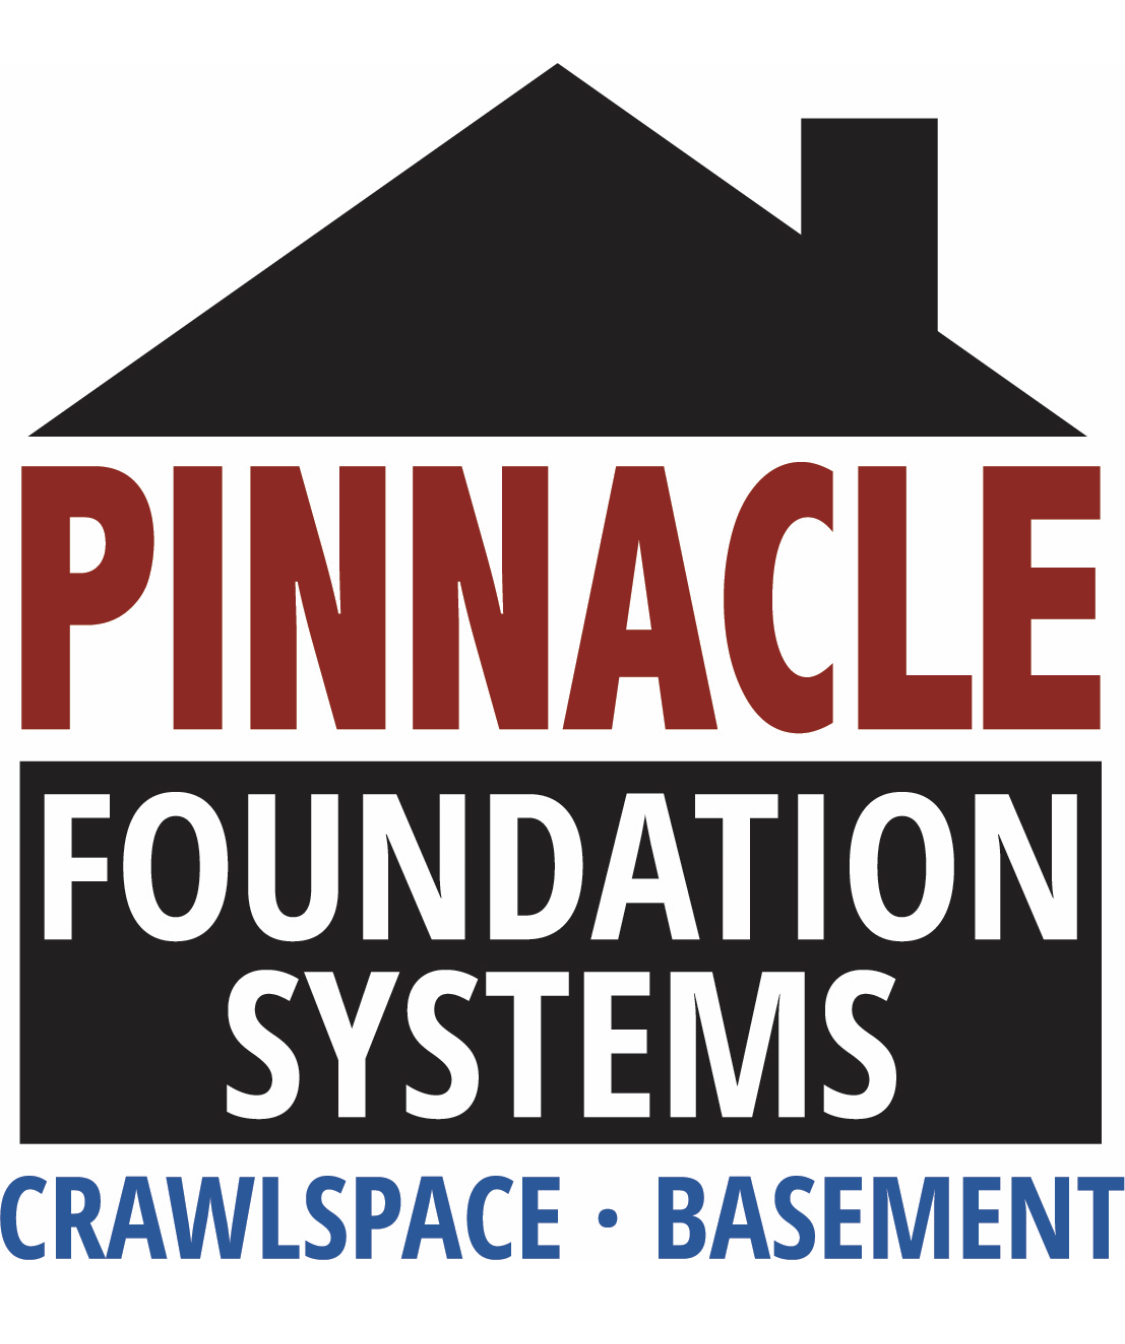 Pinnacle Foundation Systems Logo